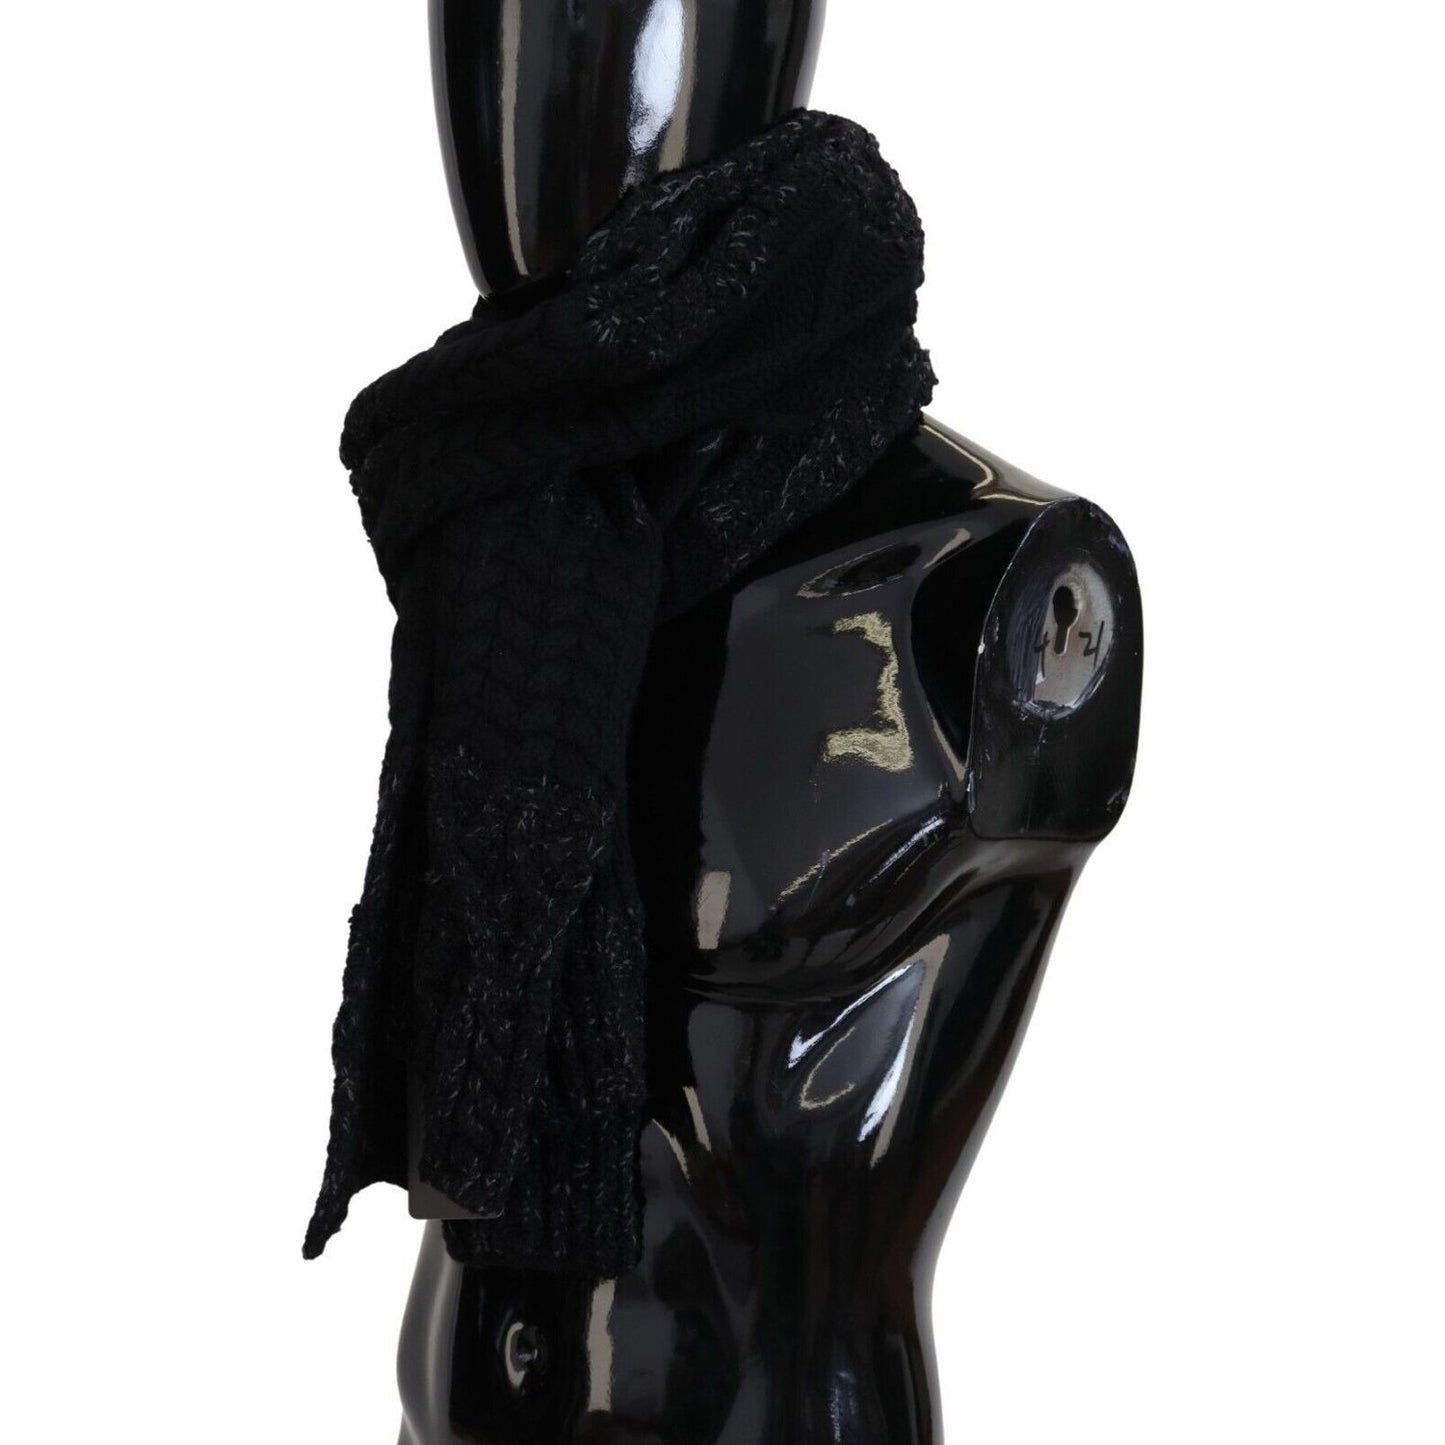 Dolce & Gabbana Elite Black Wool Blend Men's Scarf black-knitted-men-neck-wrap-shawl-scarf